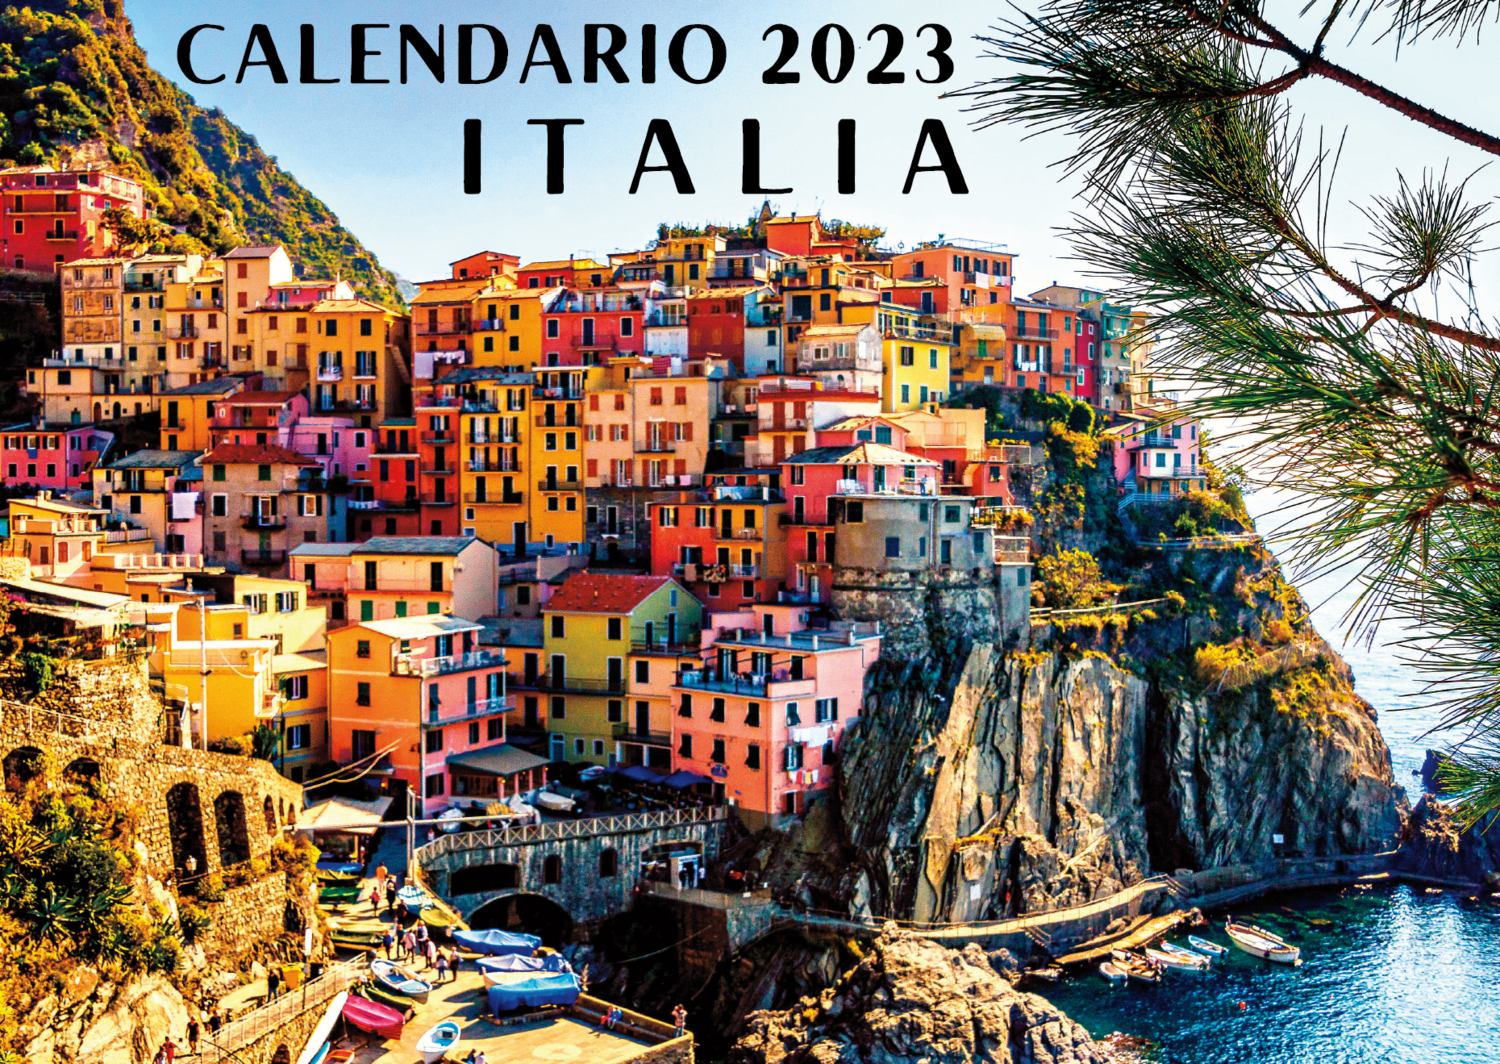 Calendar 2023 - Italy (PDF)